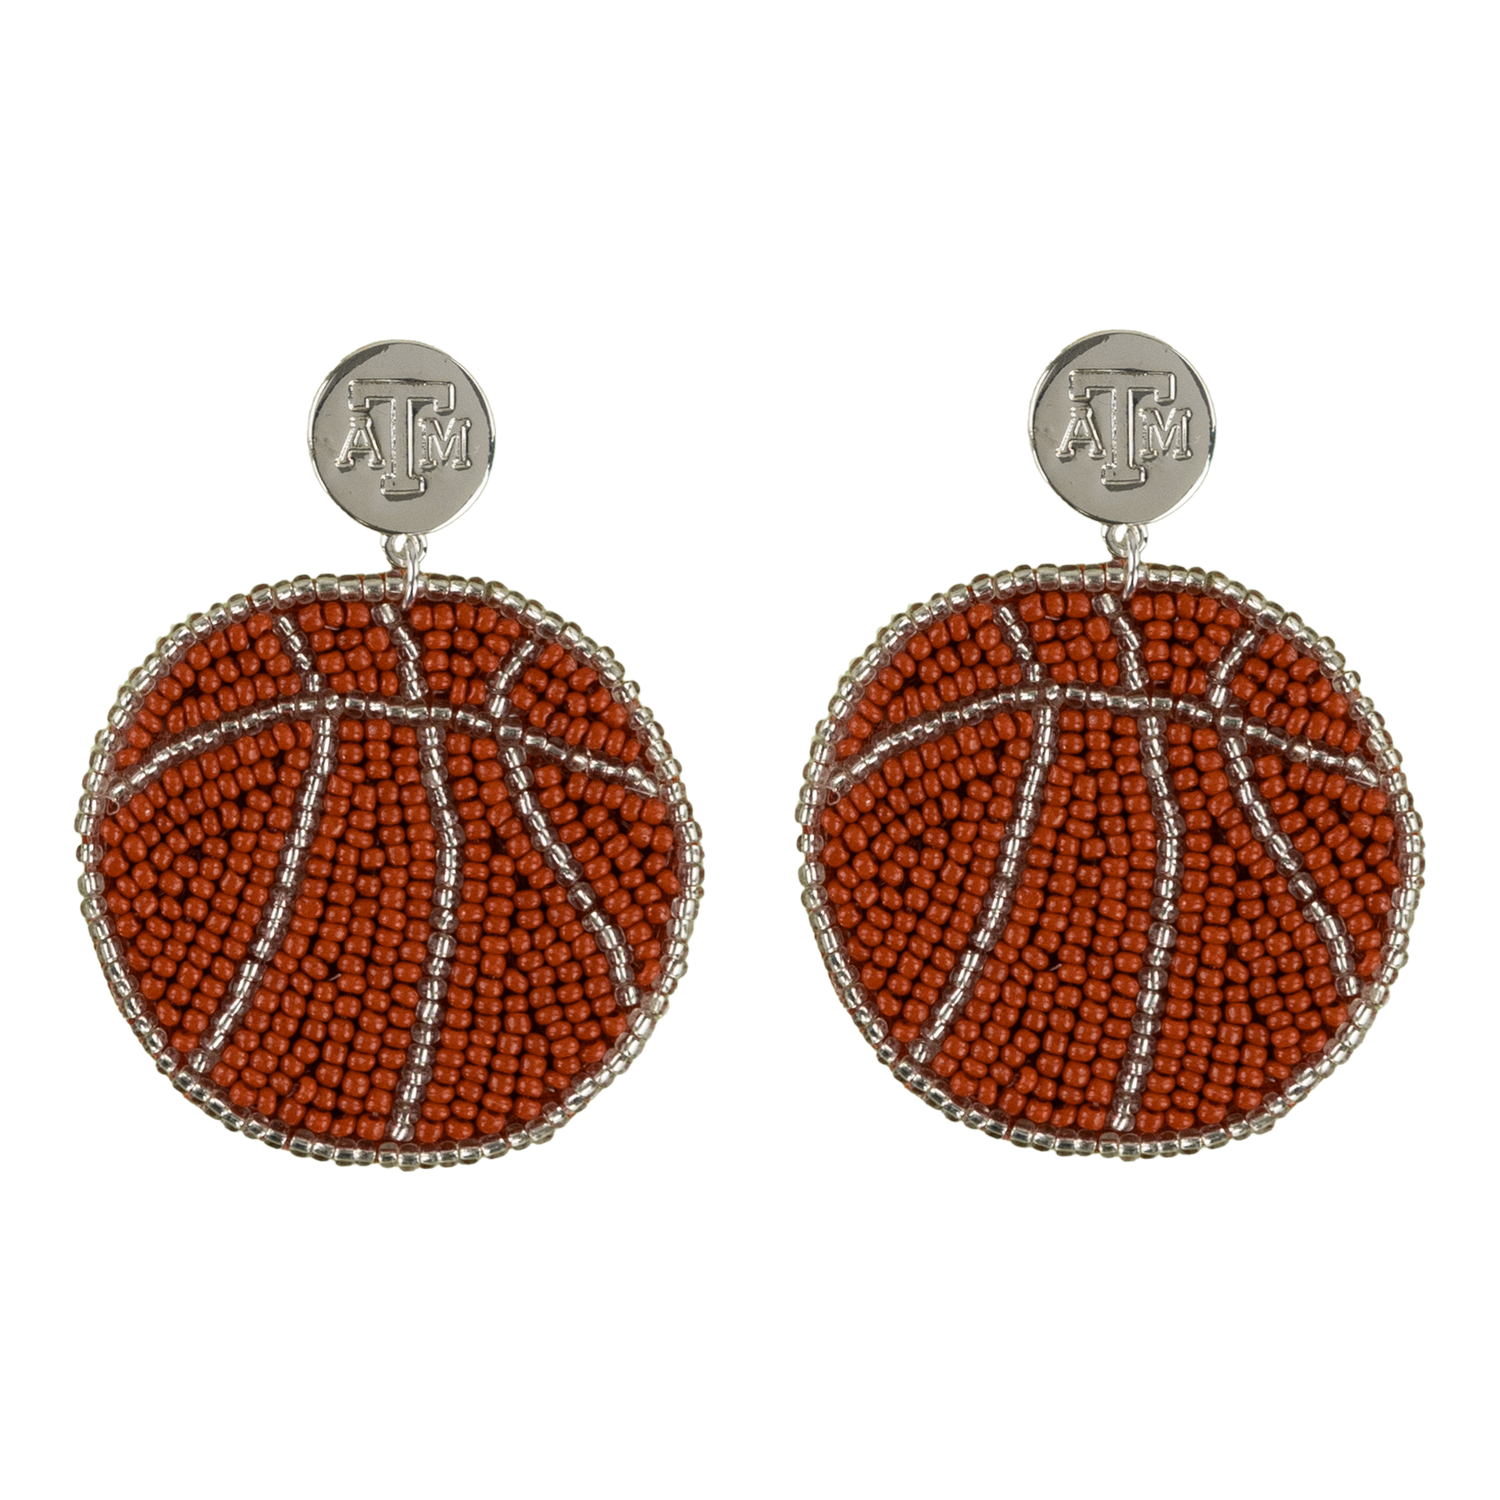 Air Ball Basketball Earrings